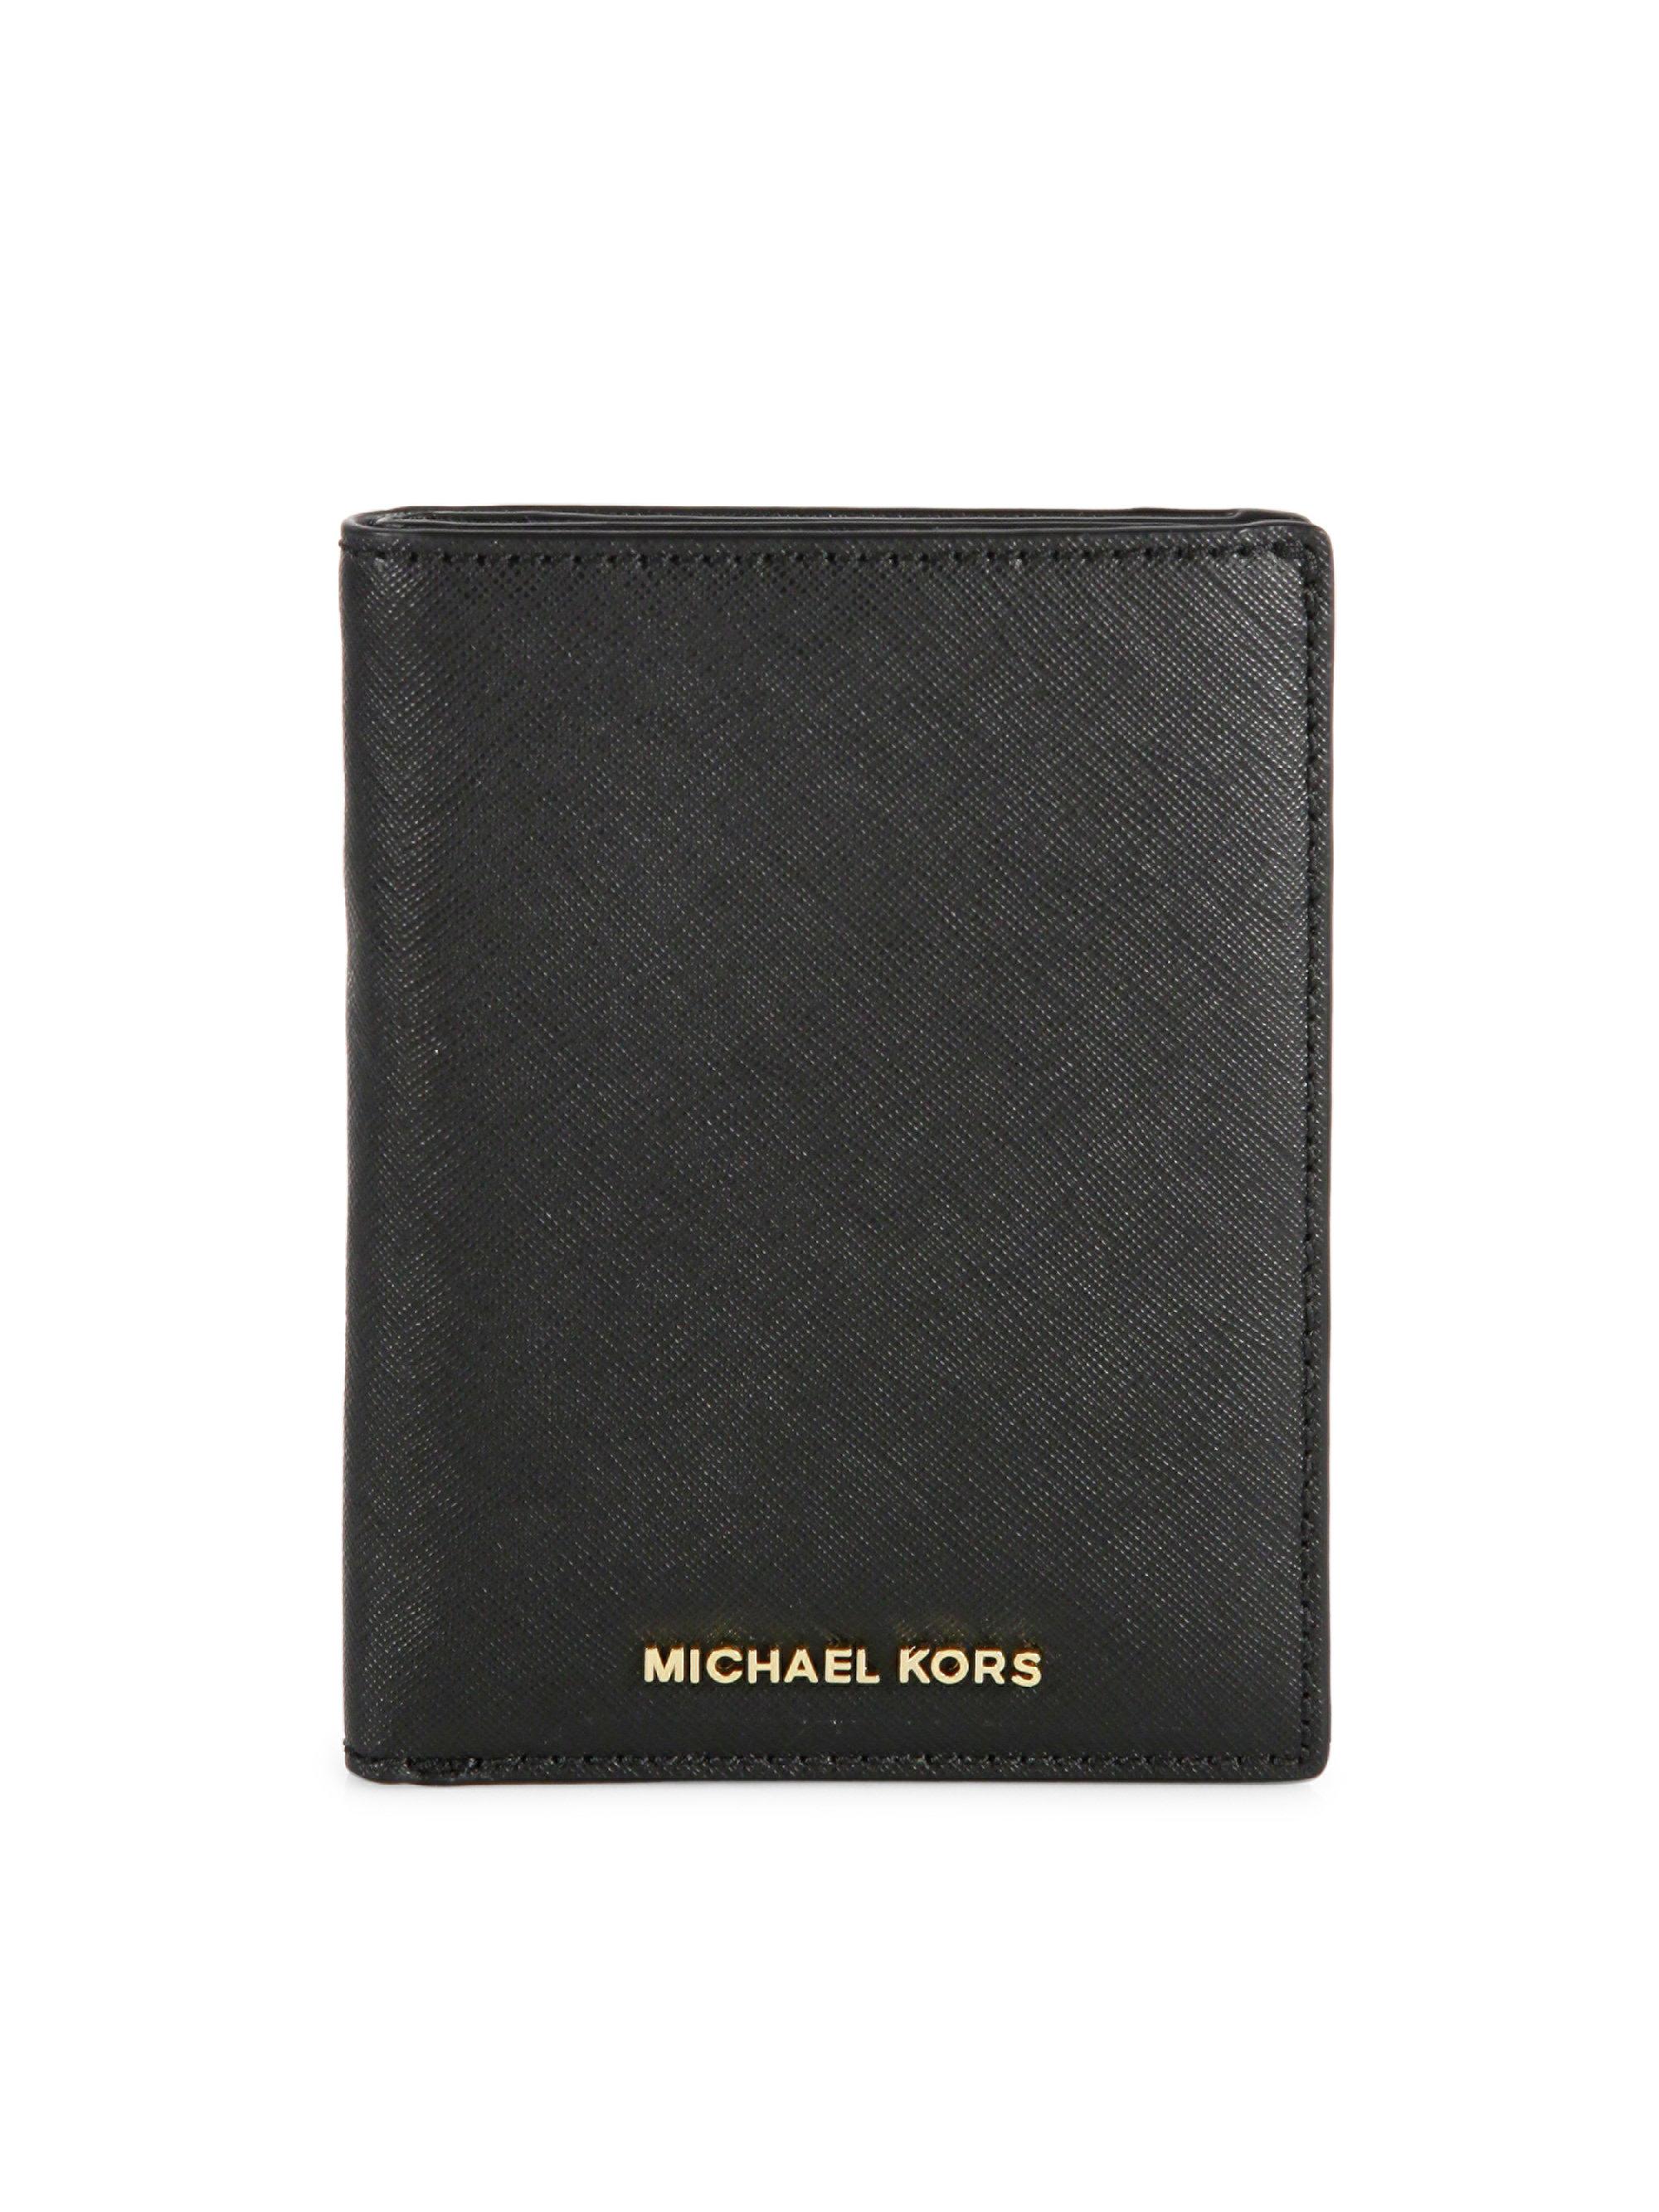 MICHAEL Michael Kors Leather Passport Wallet in Black for Men - Lyst